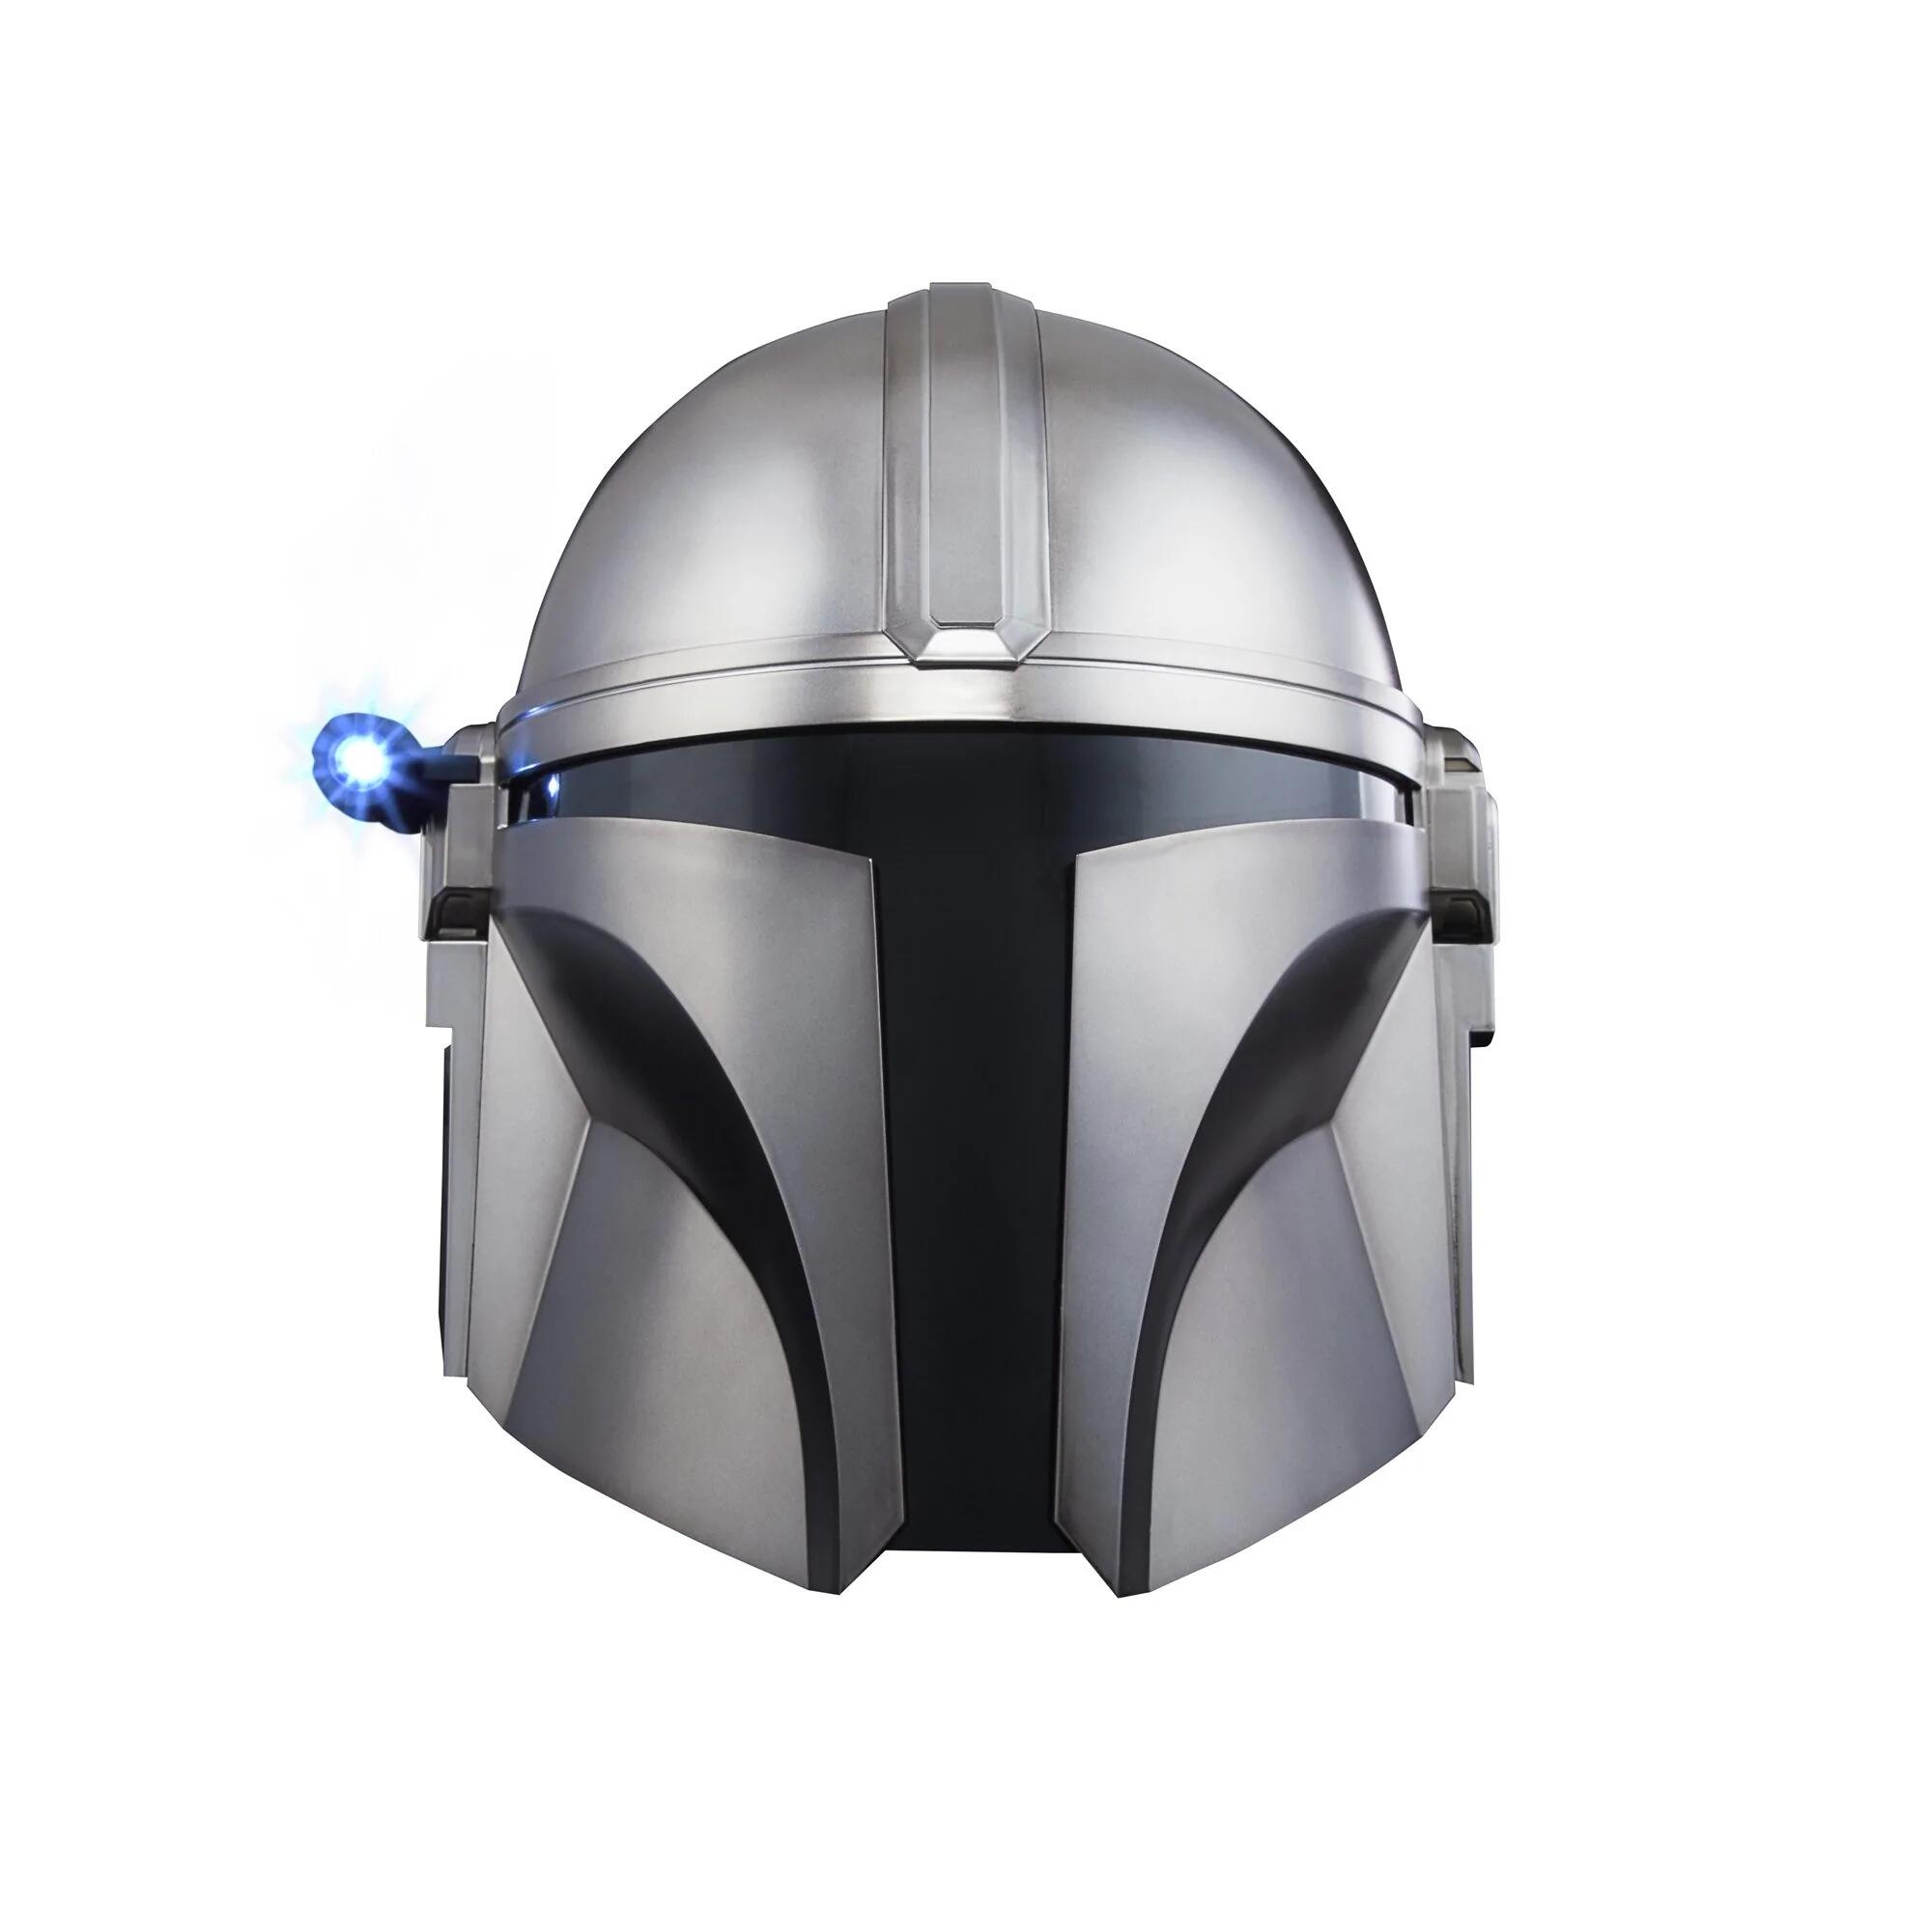 The Mandalorian Electronic Helmet © 2023 Hasbro.